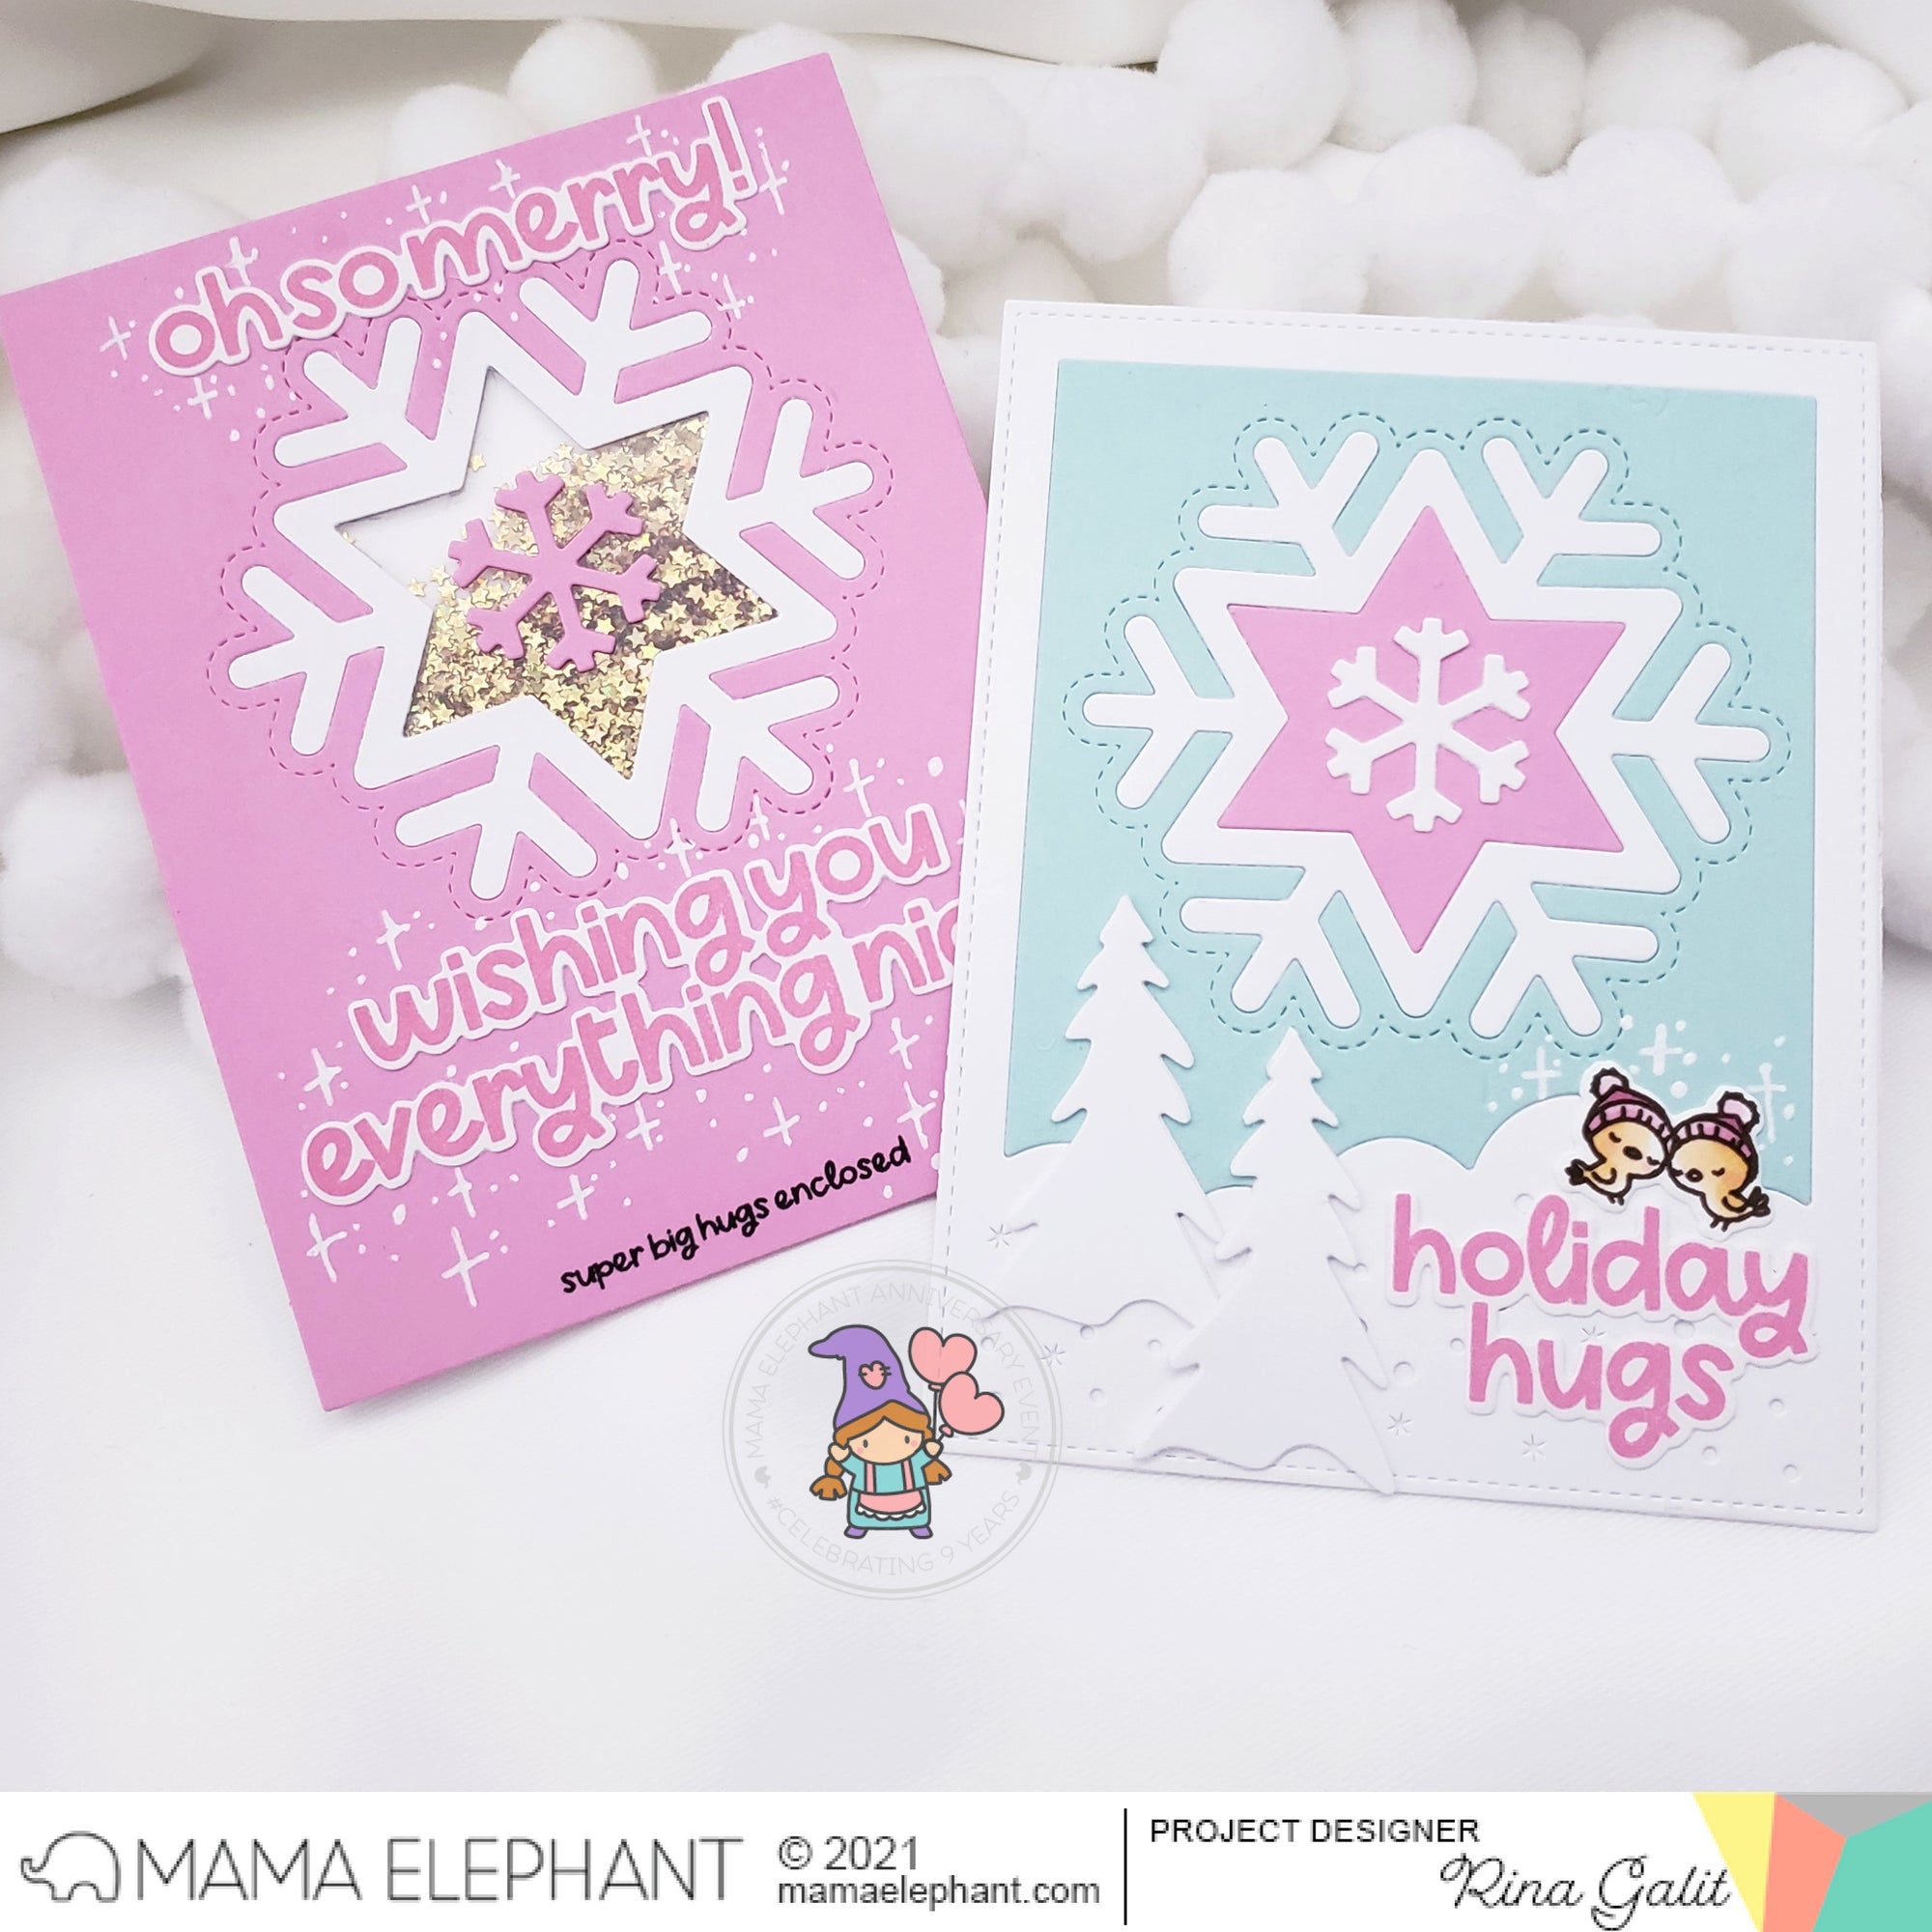 Mega Snowflake Cover - Creative Cuts